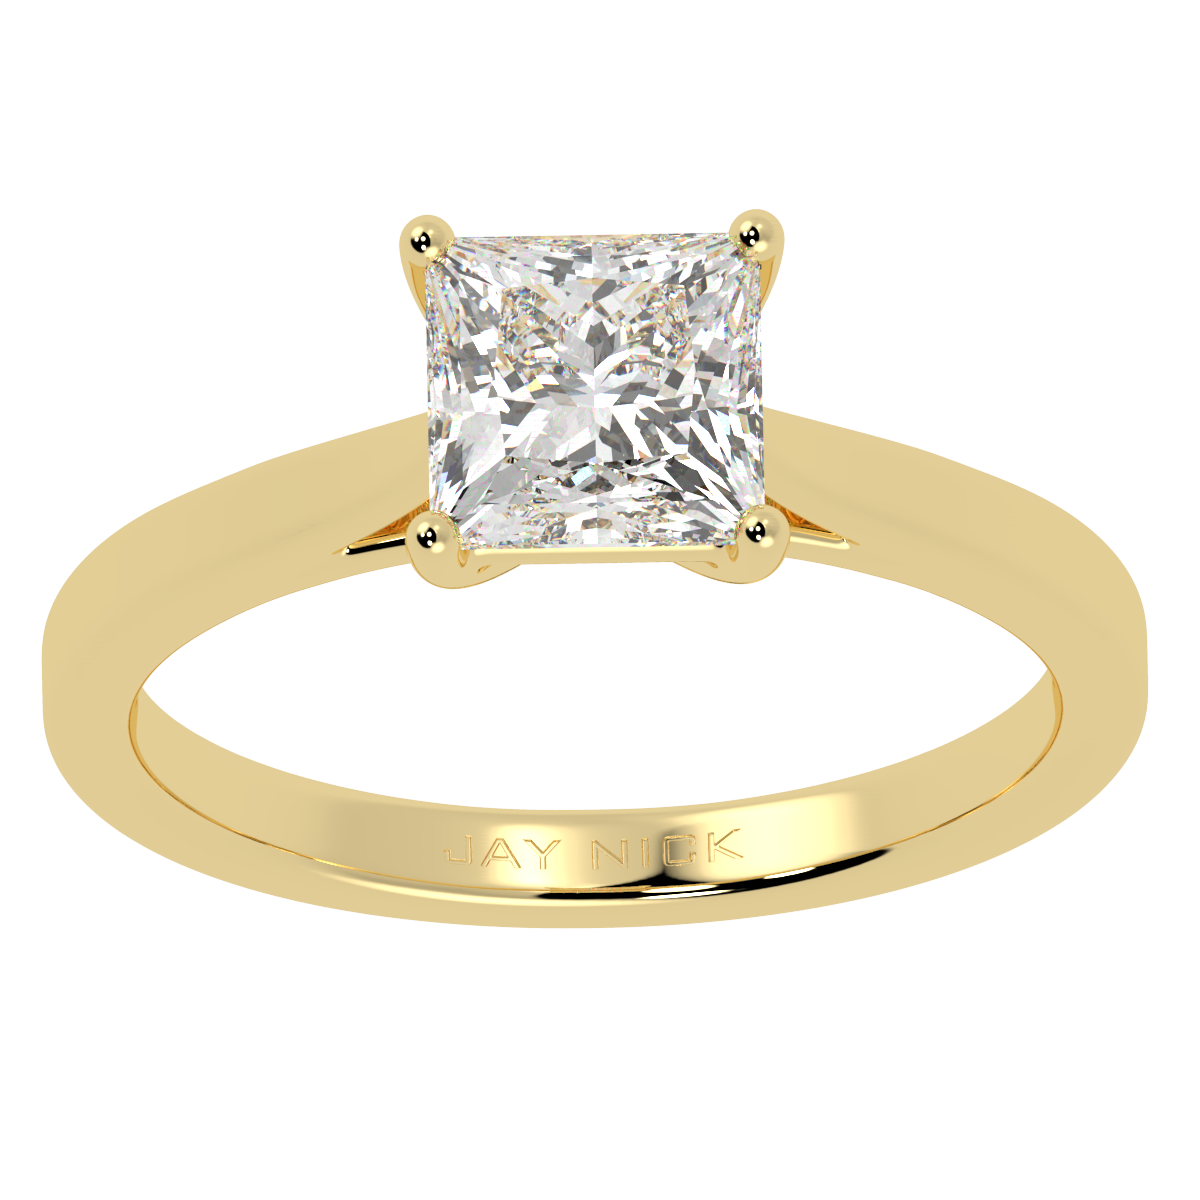 Princess Cut Solitaire Ring